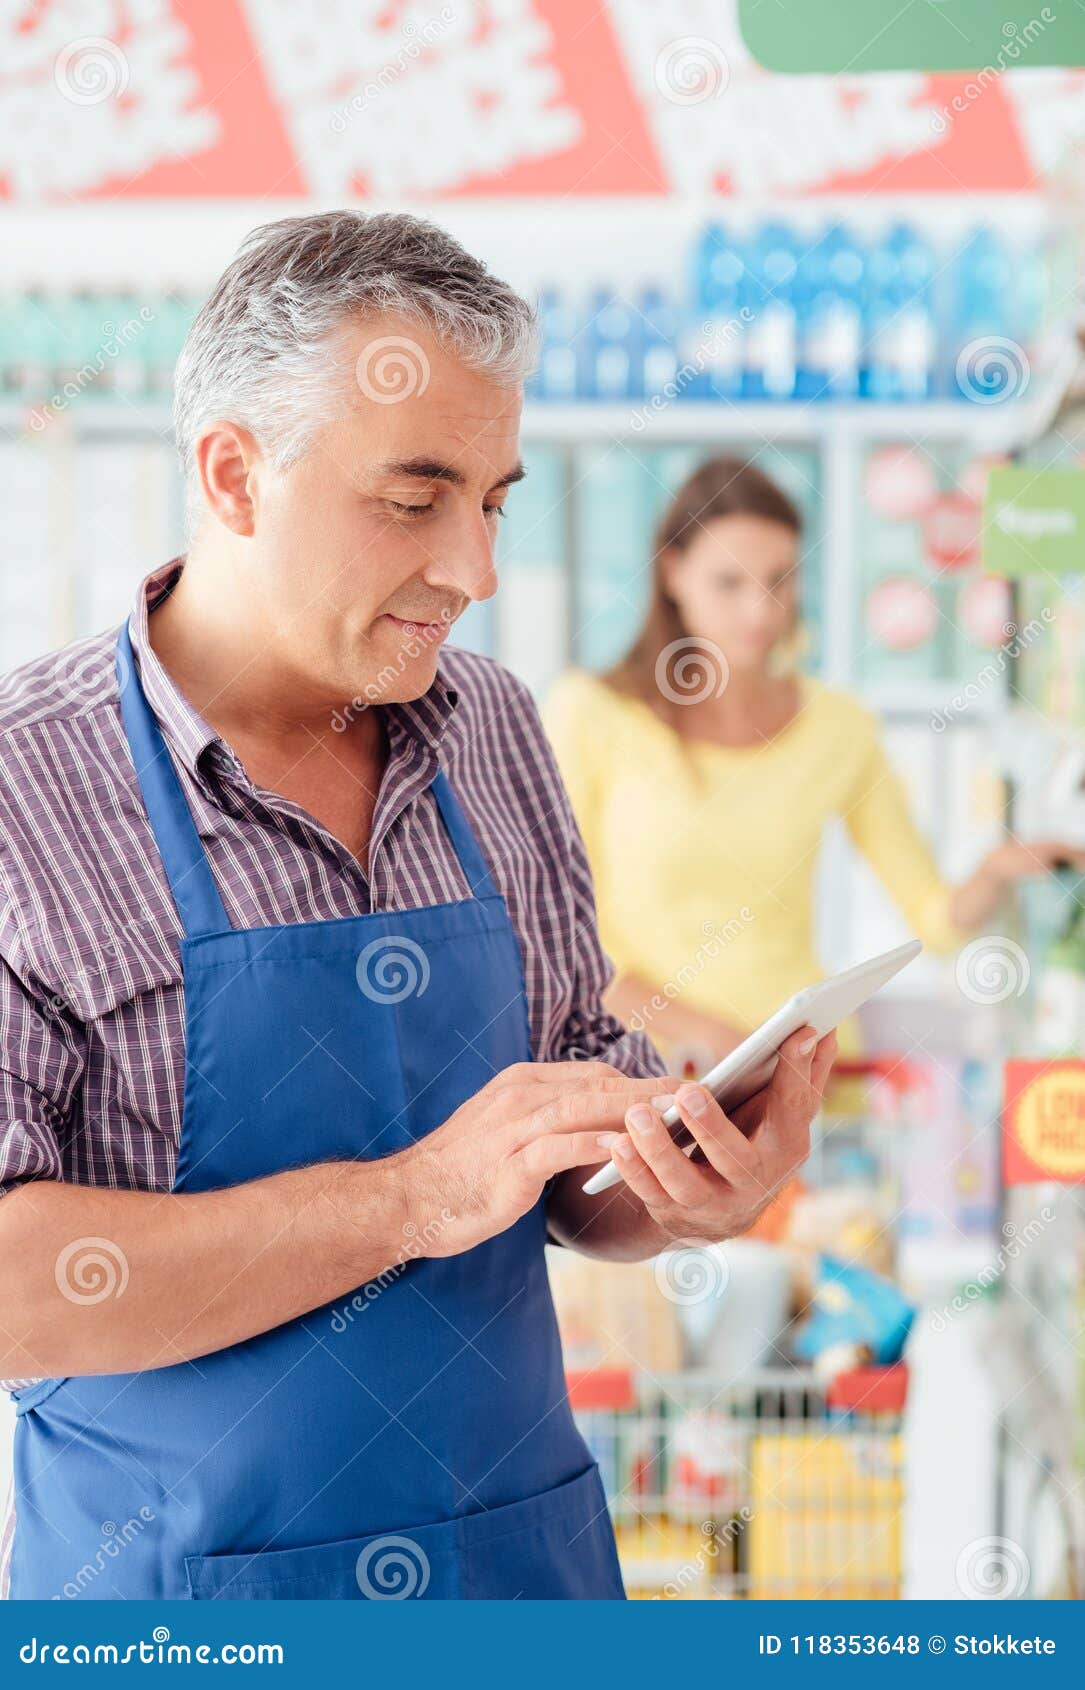 supermarket clerk using a tablet